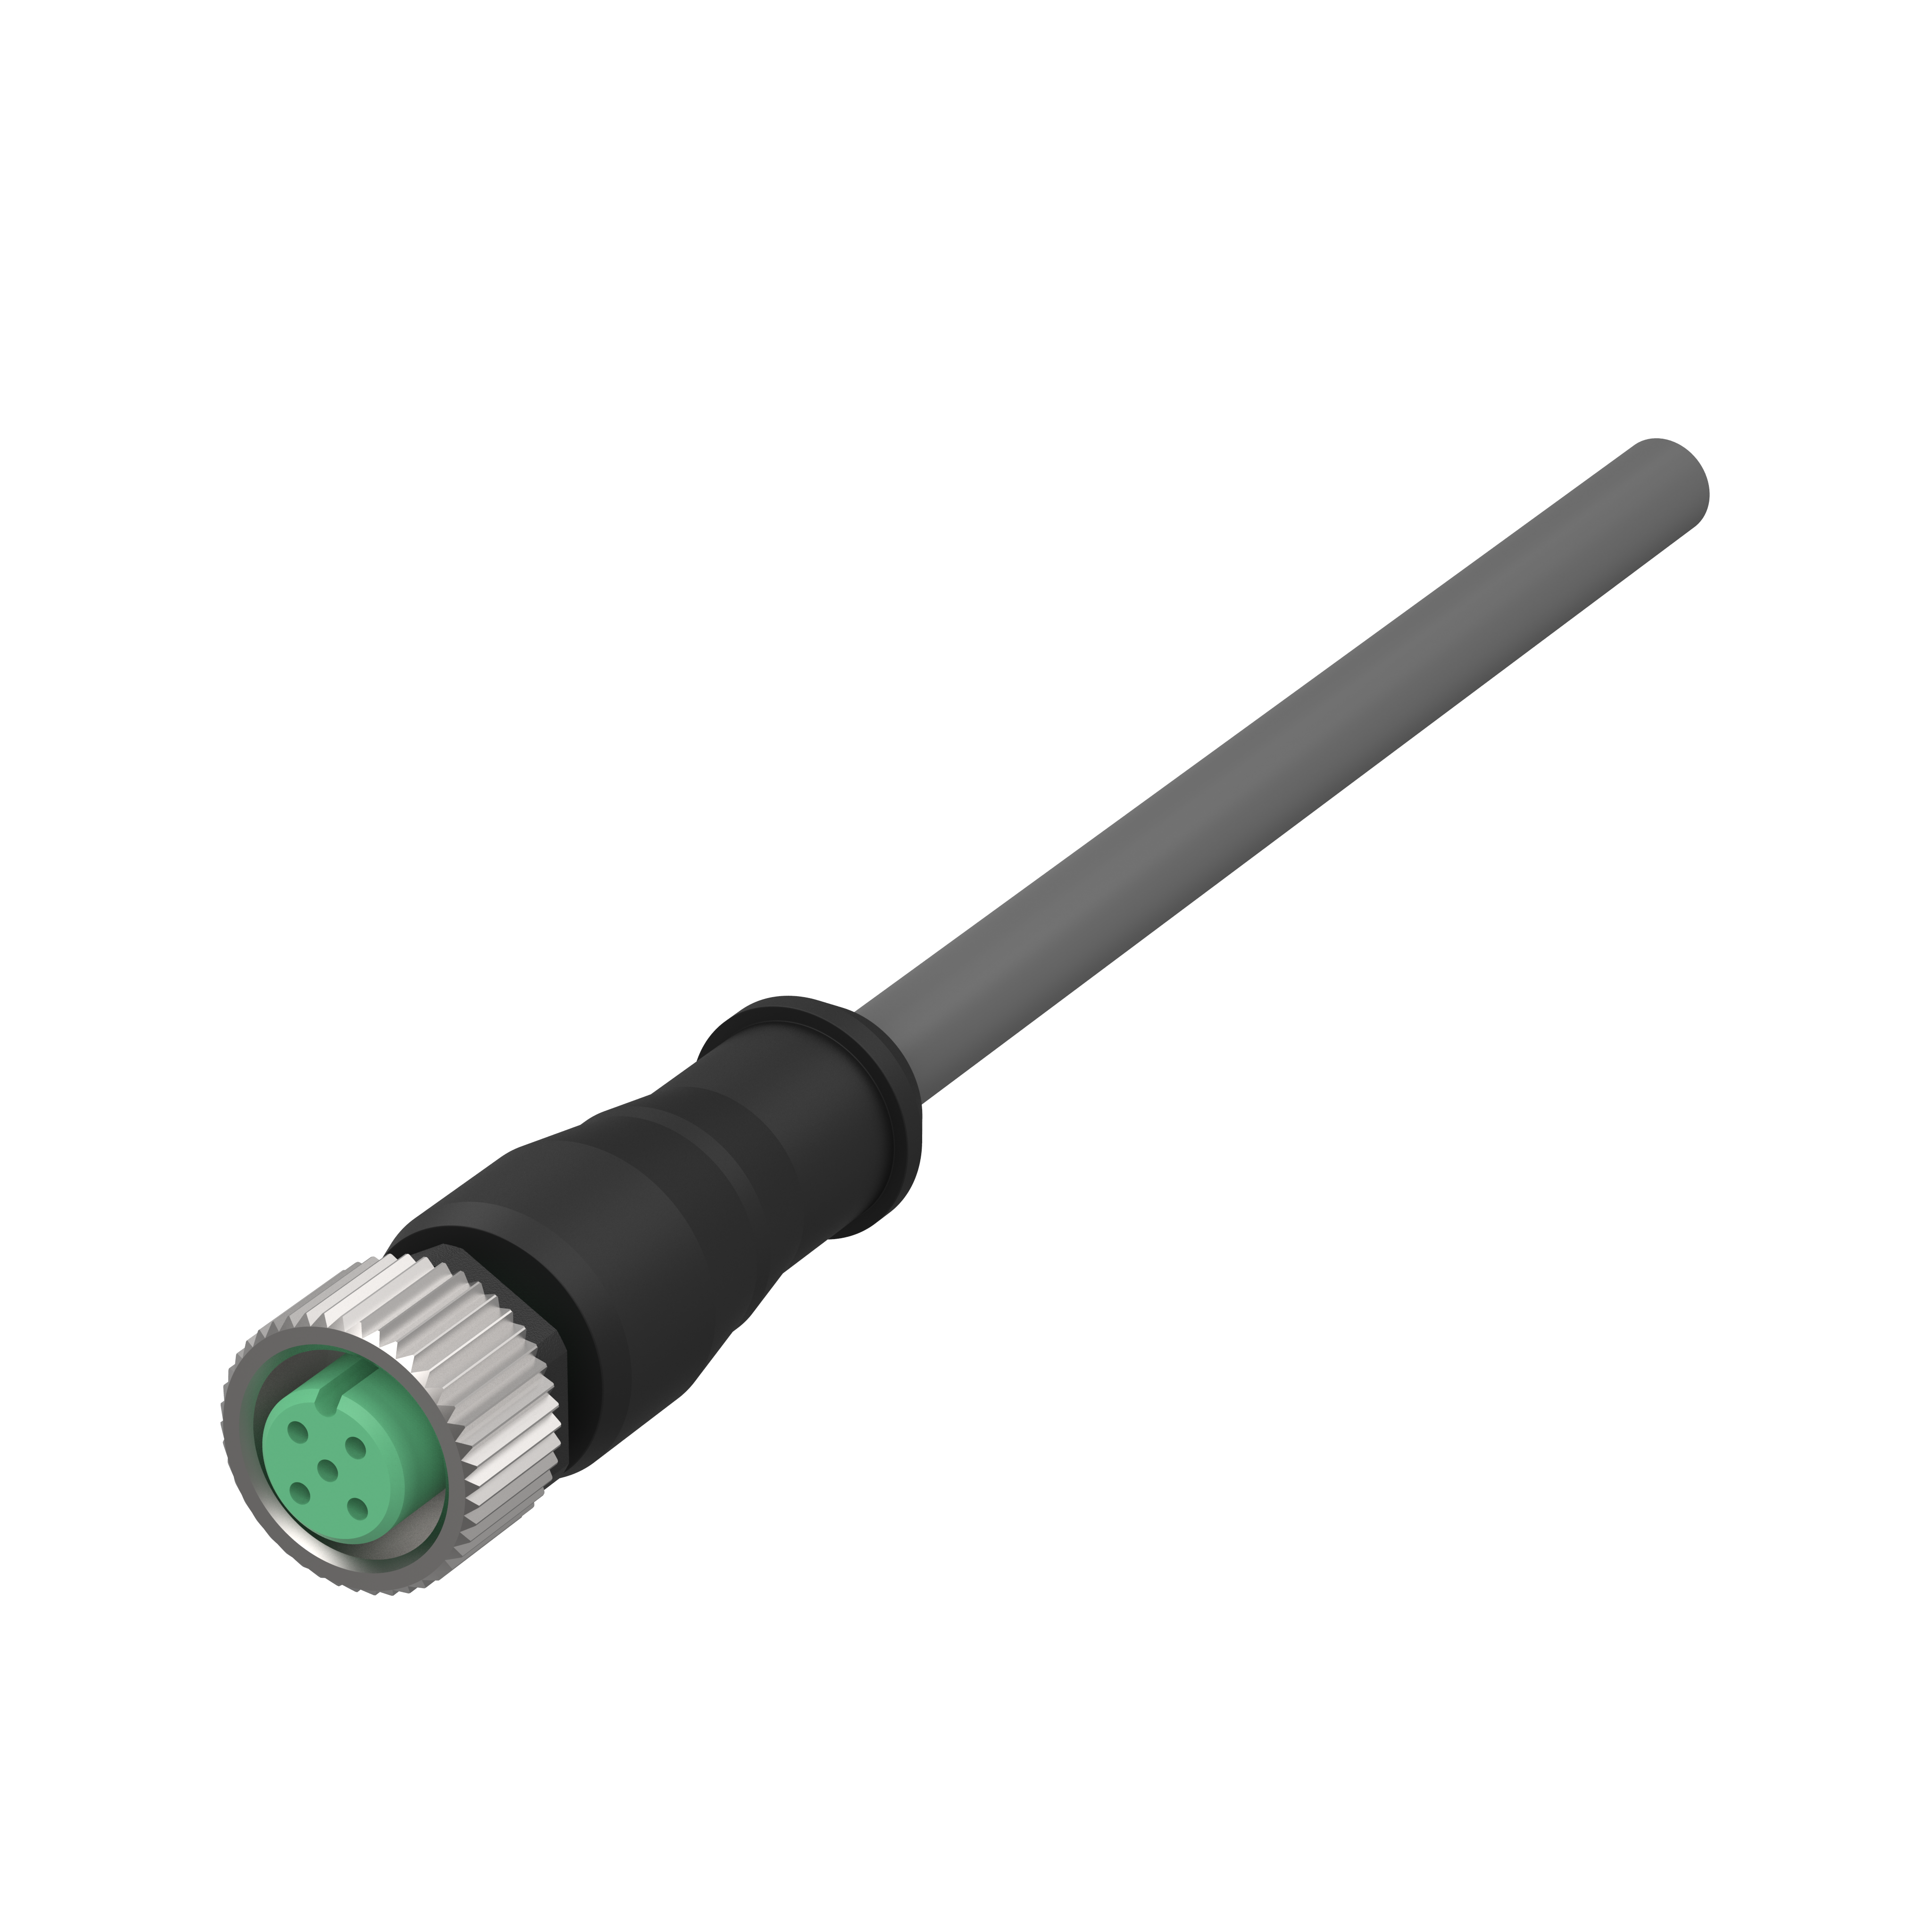 Round connector - K14G005 - 4x0,34mm², 5m, PVC, black